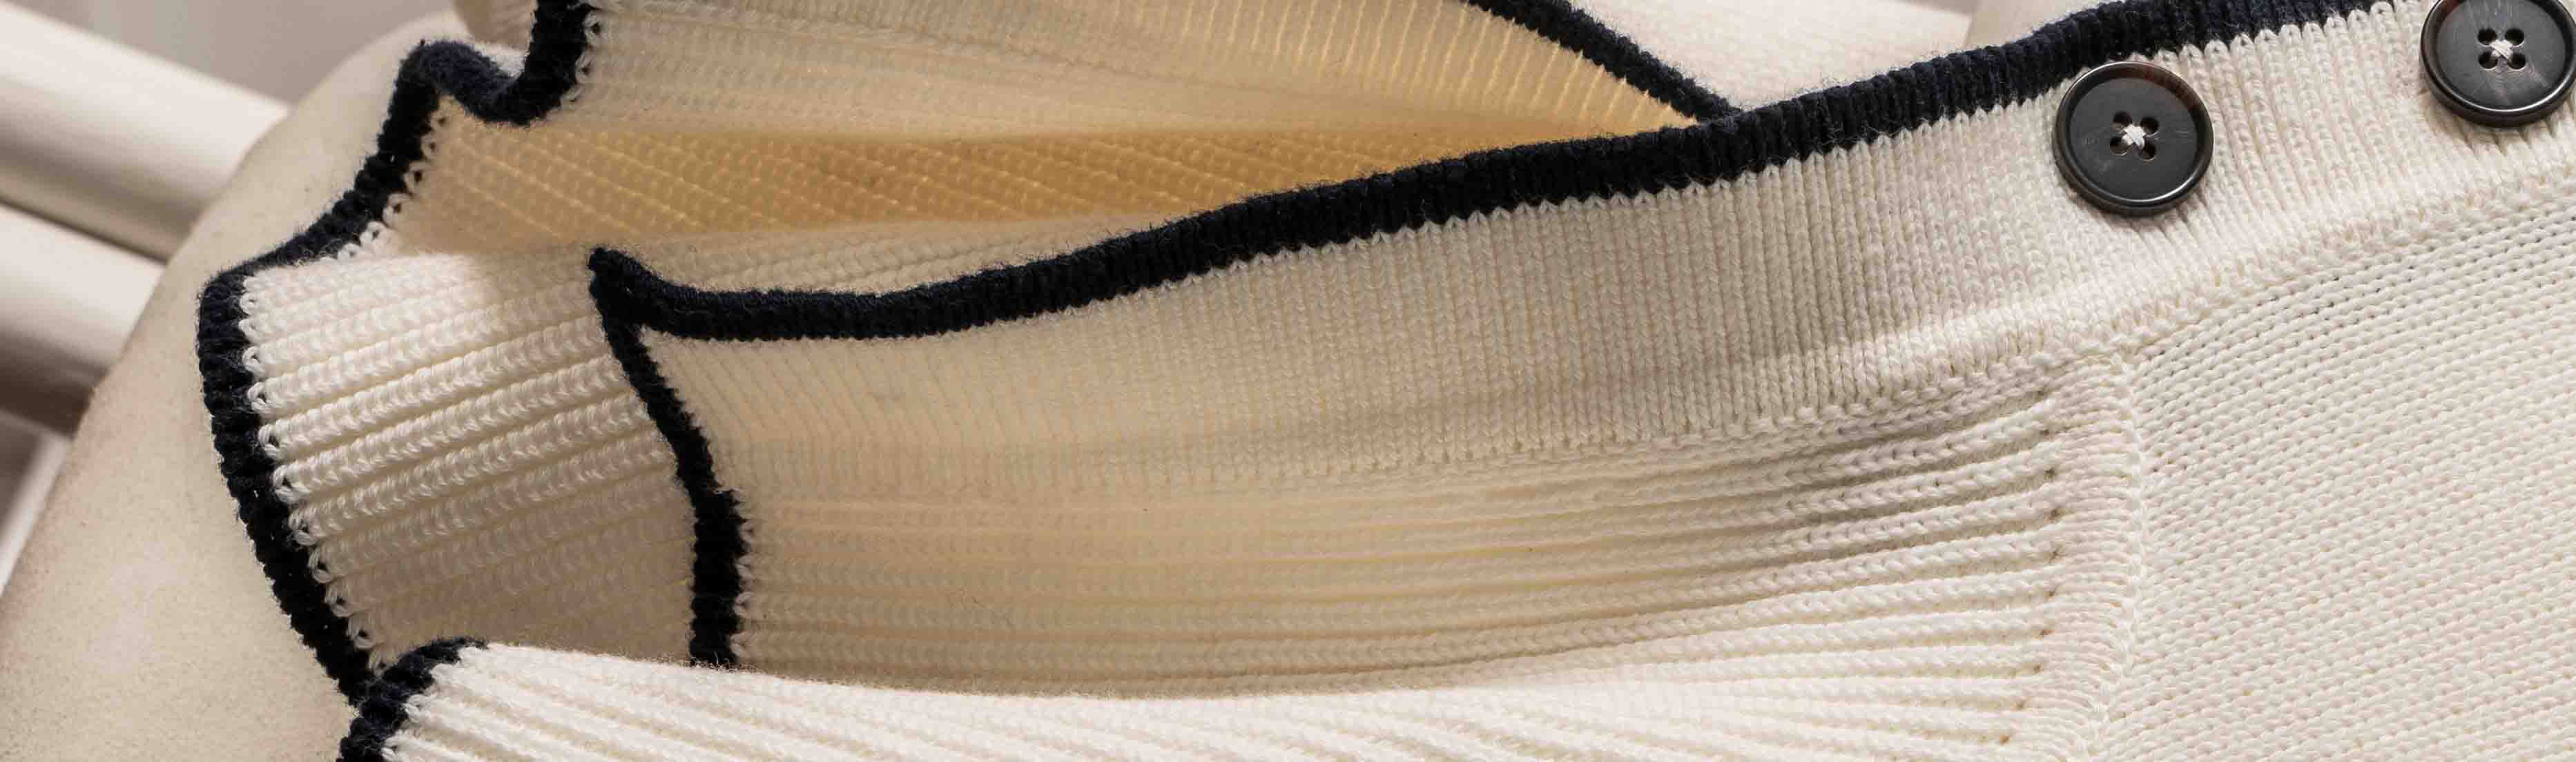 Detail of a striped cotton shirt.